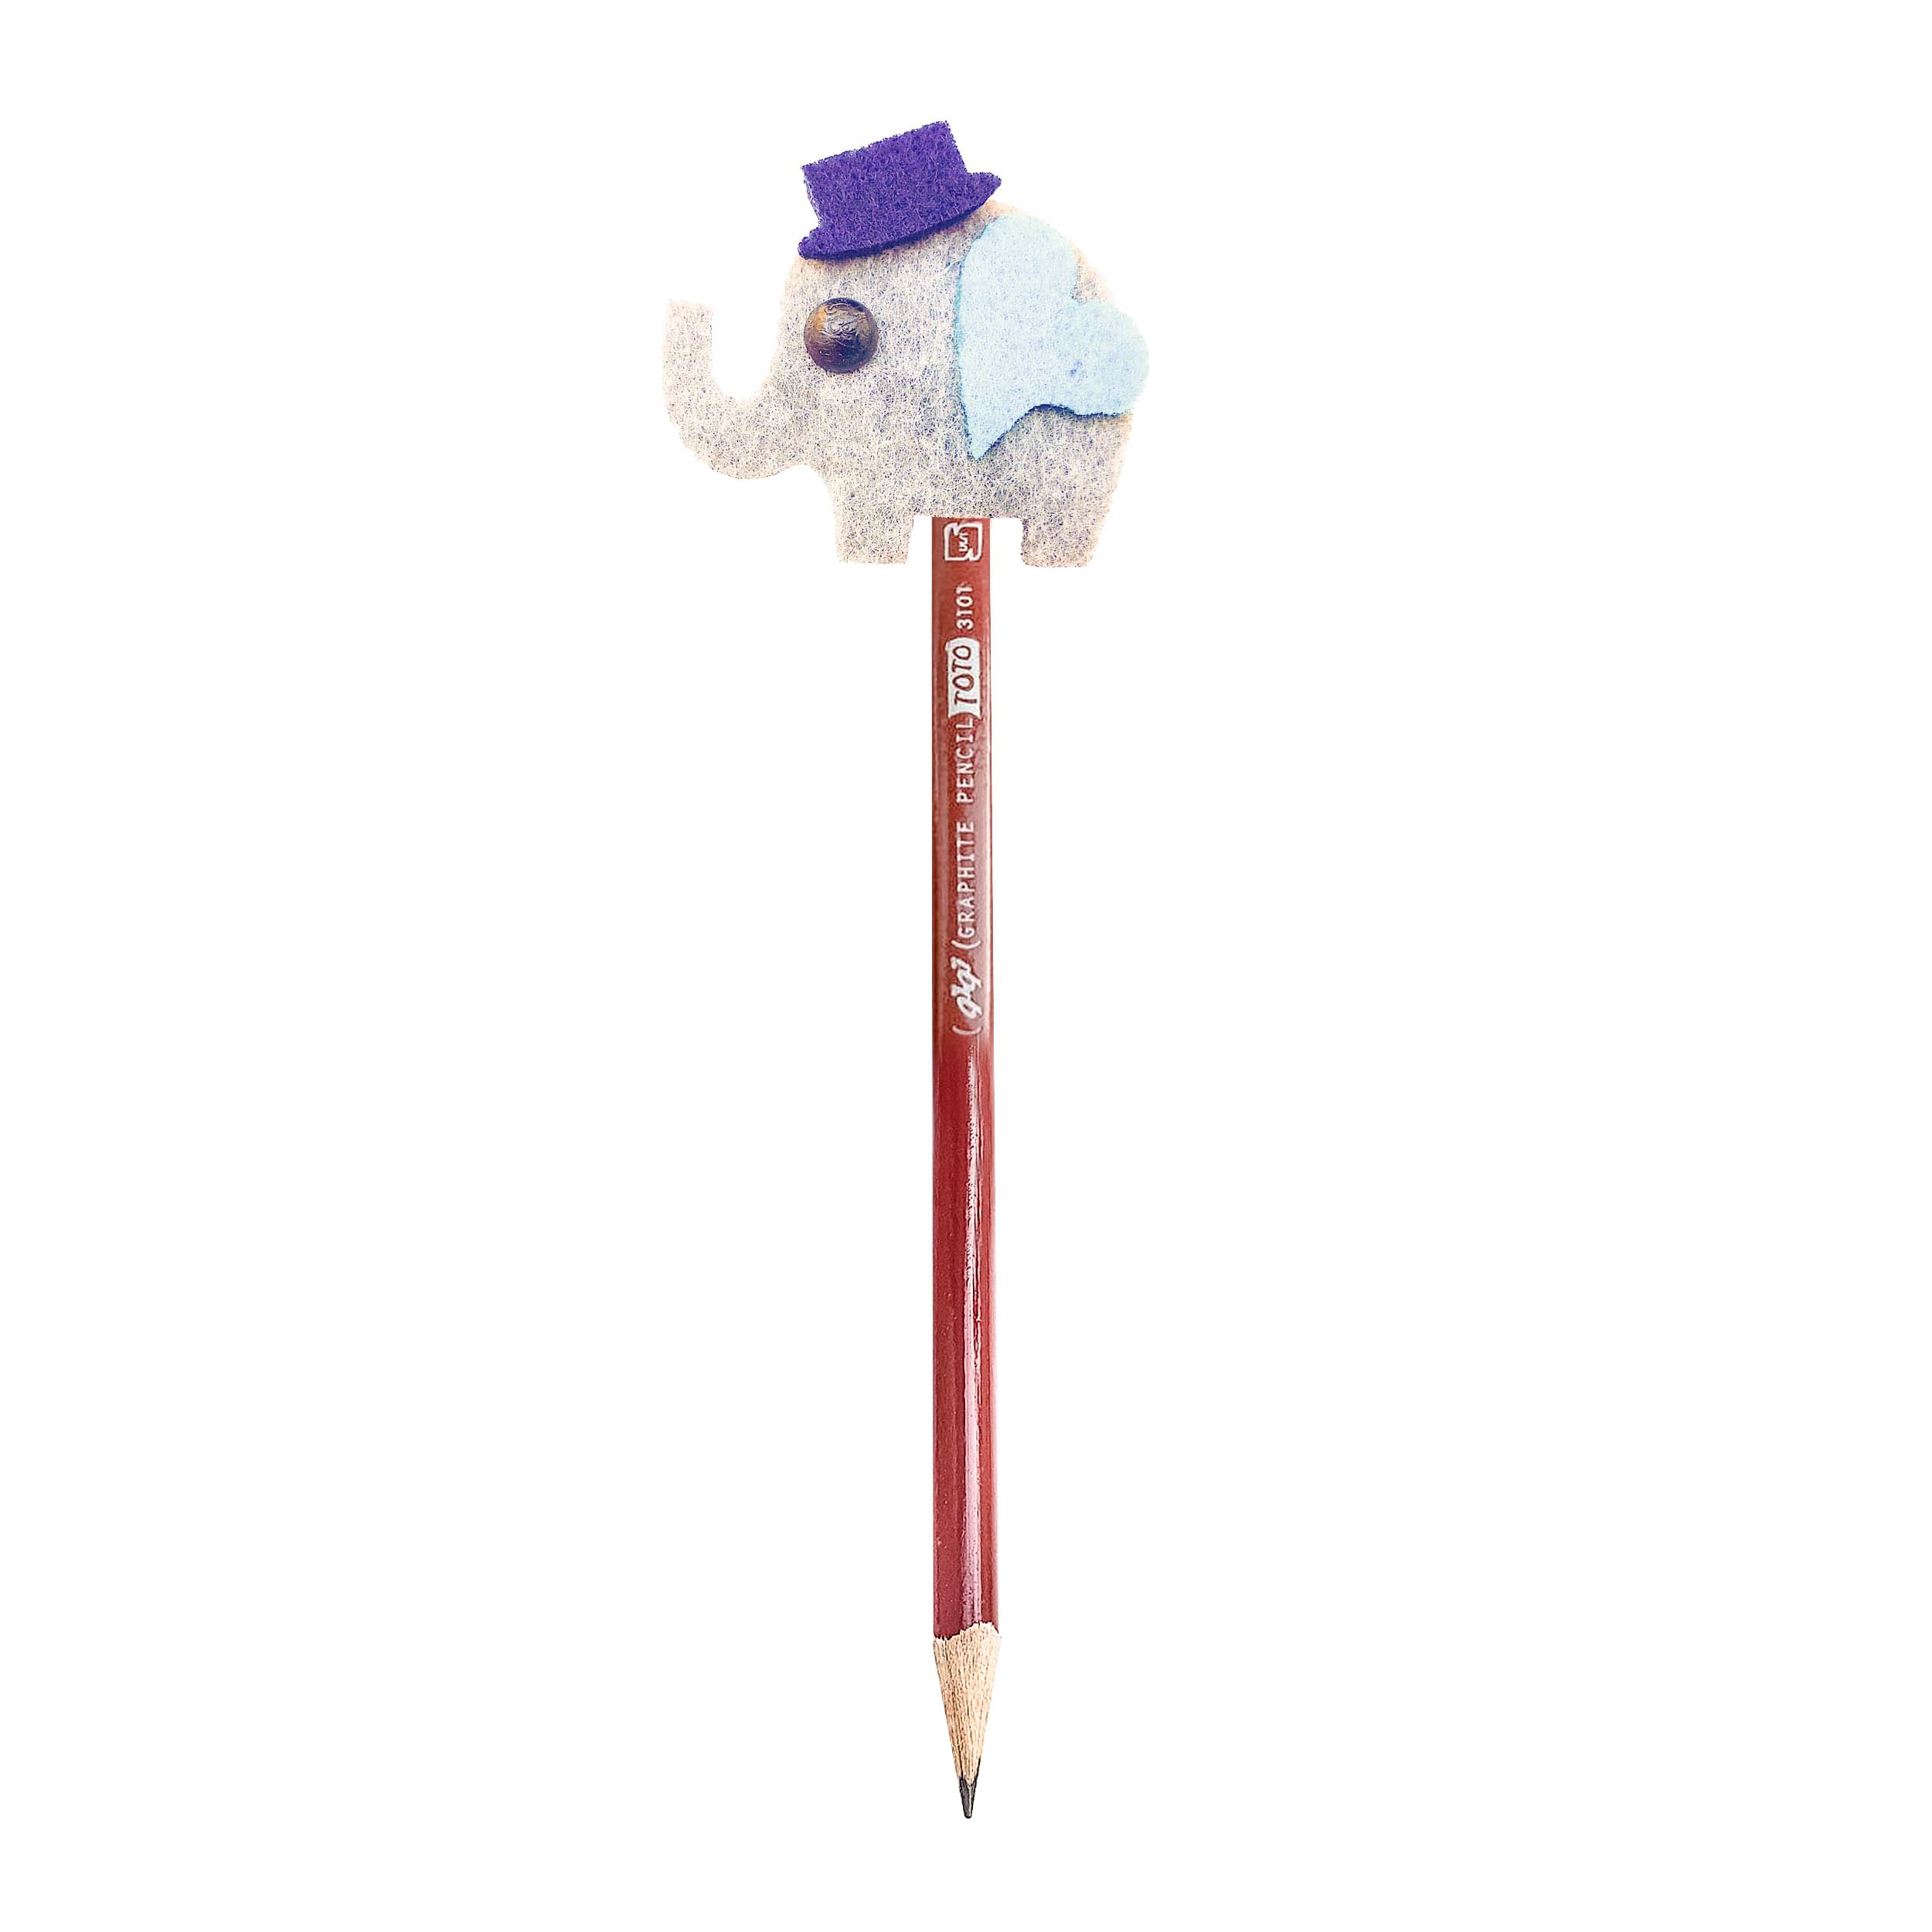 مداد مشکی توتو طرح فیلی J1 به همراه سرمدادی